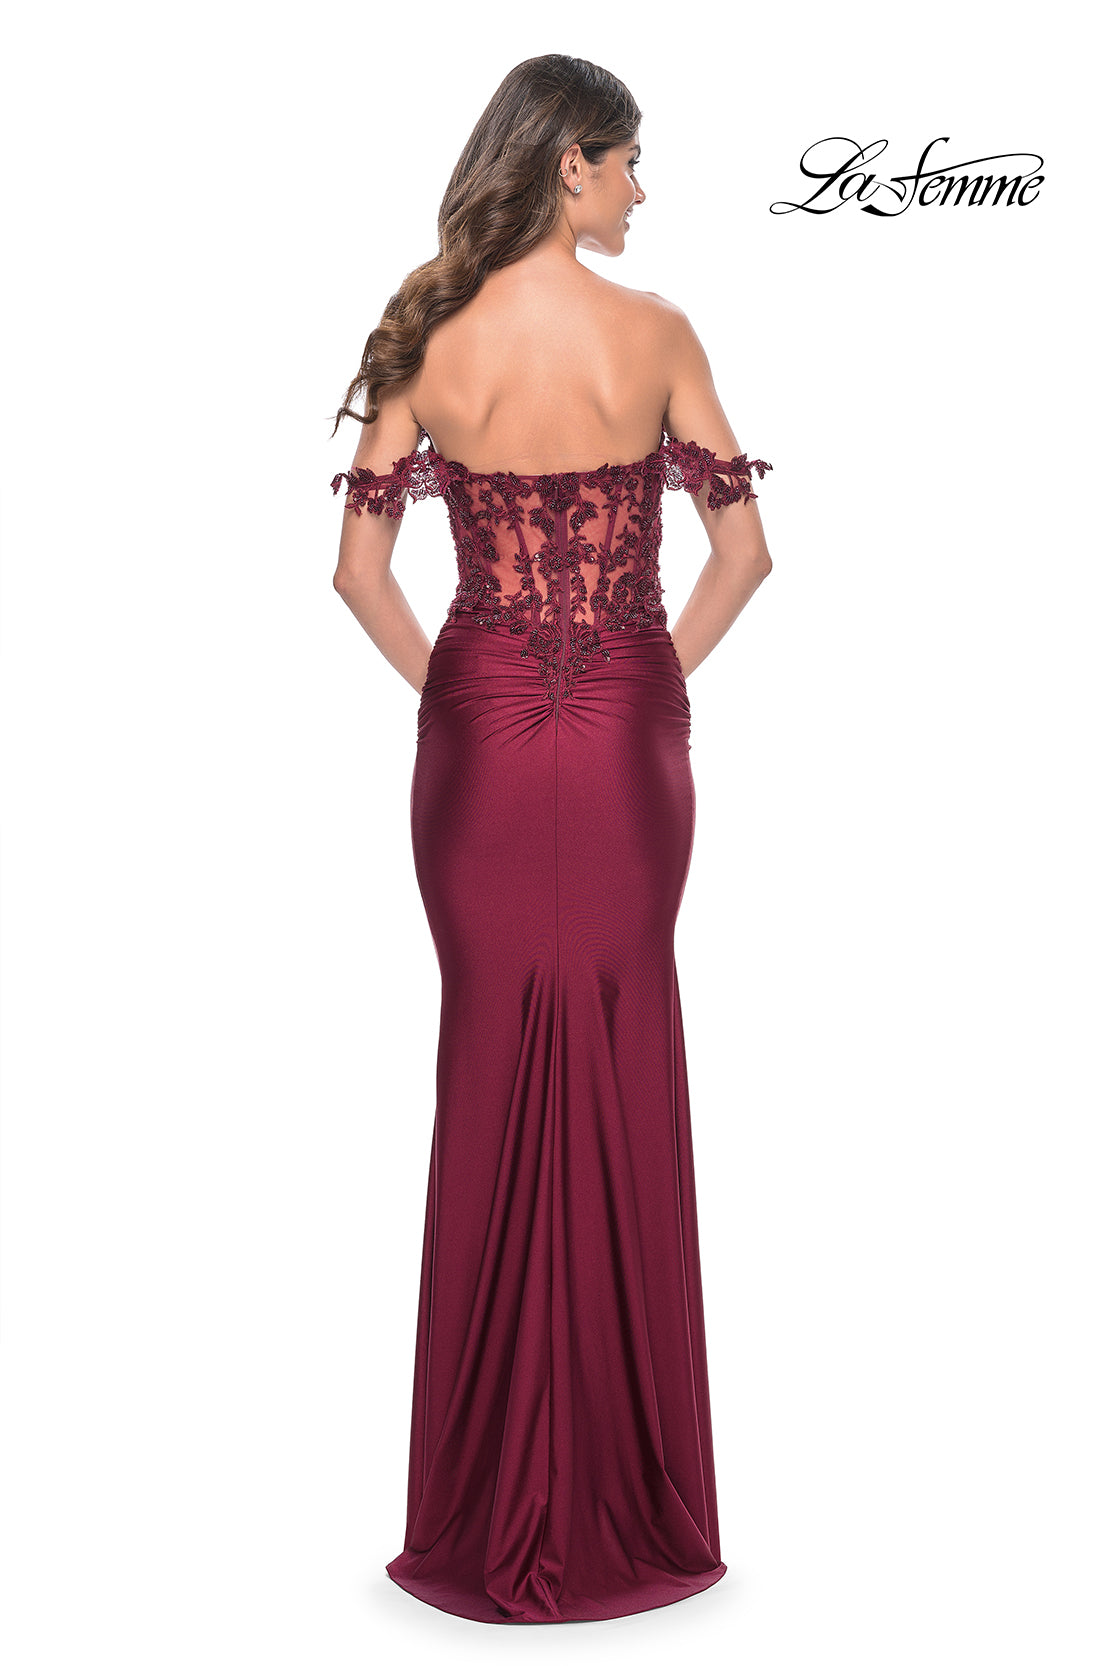 La-Femme-32302-Sweetheart-Neckline-Zipper-Back-Corset-Lace-Jersey-Fitted-Dark-Berry-Evening-Dress-B-Chic-Fashions-Prom-Dress